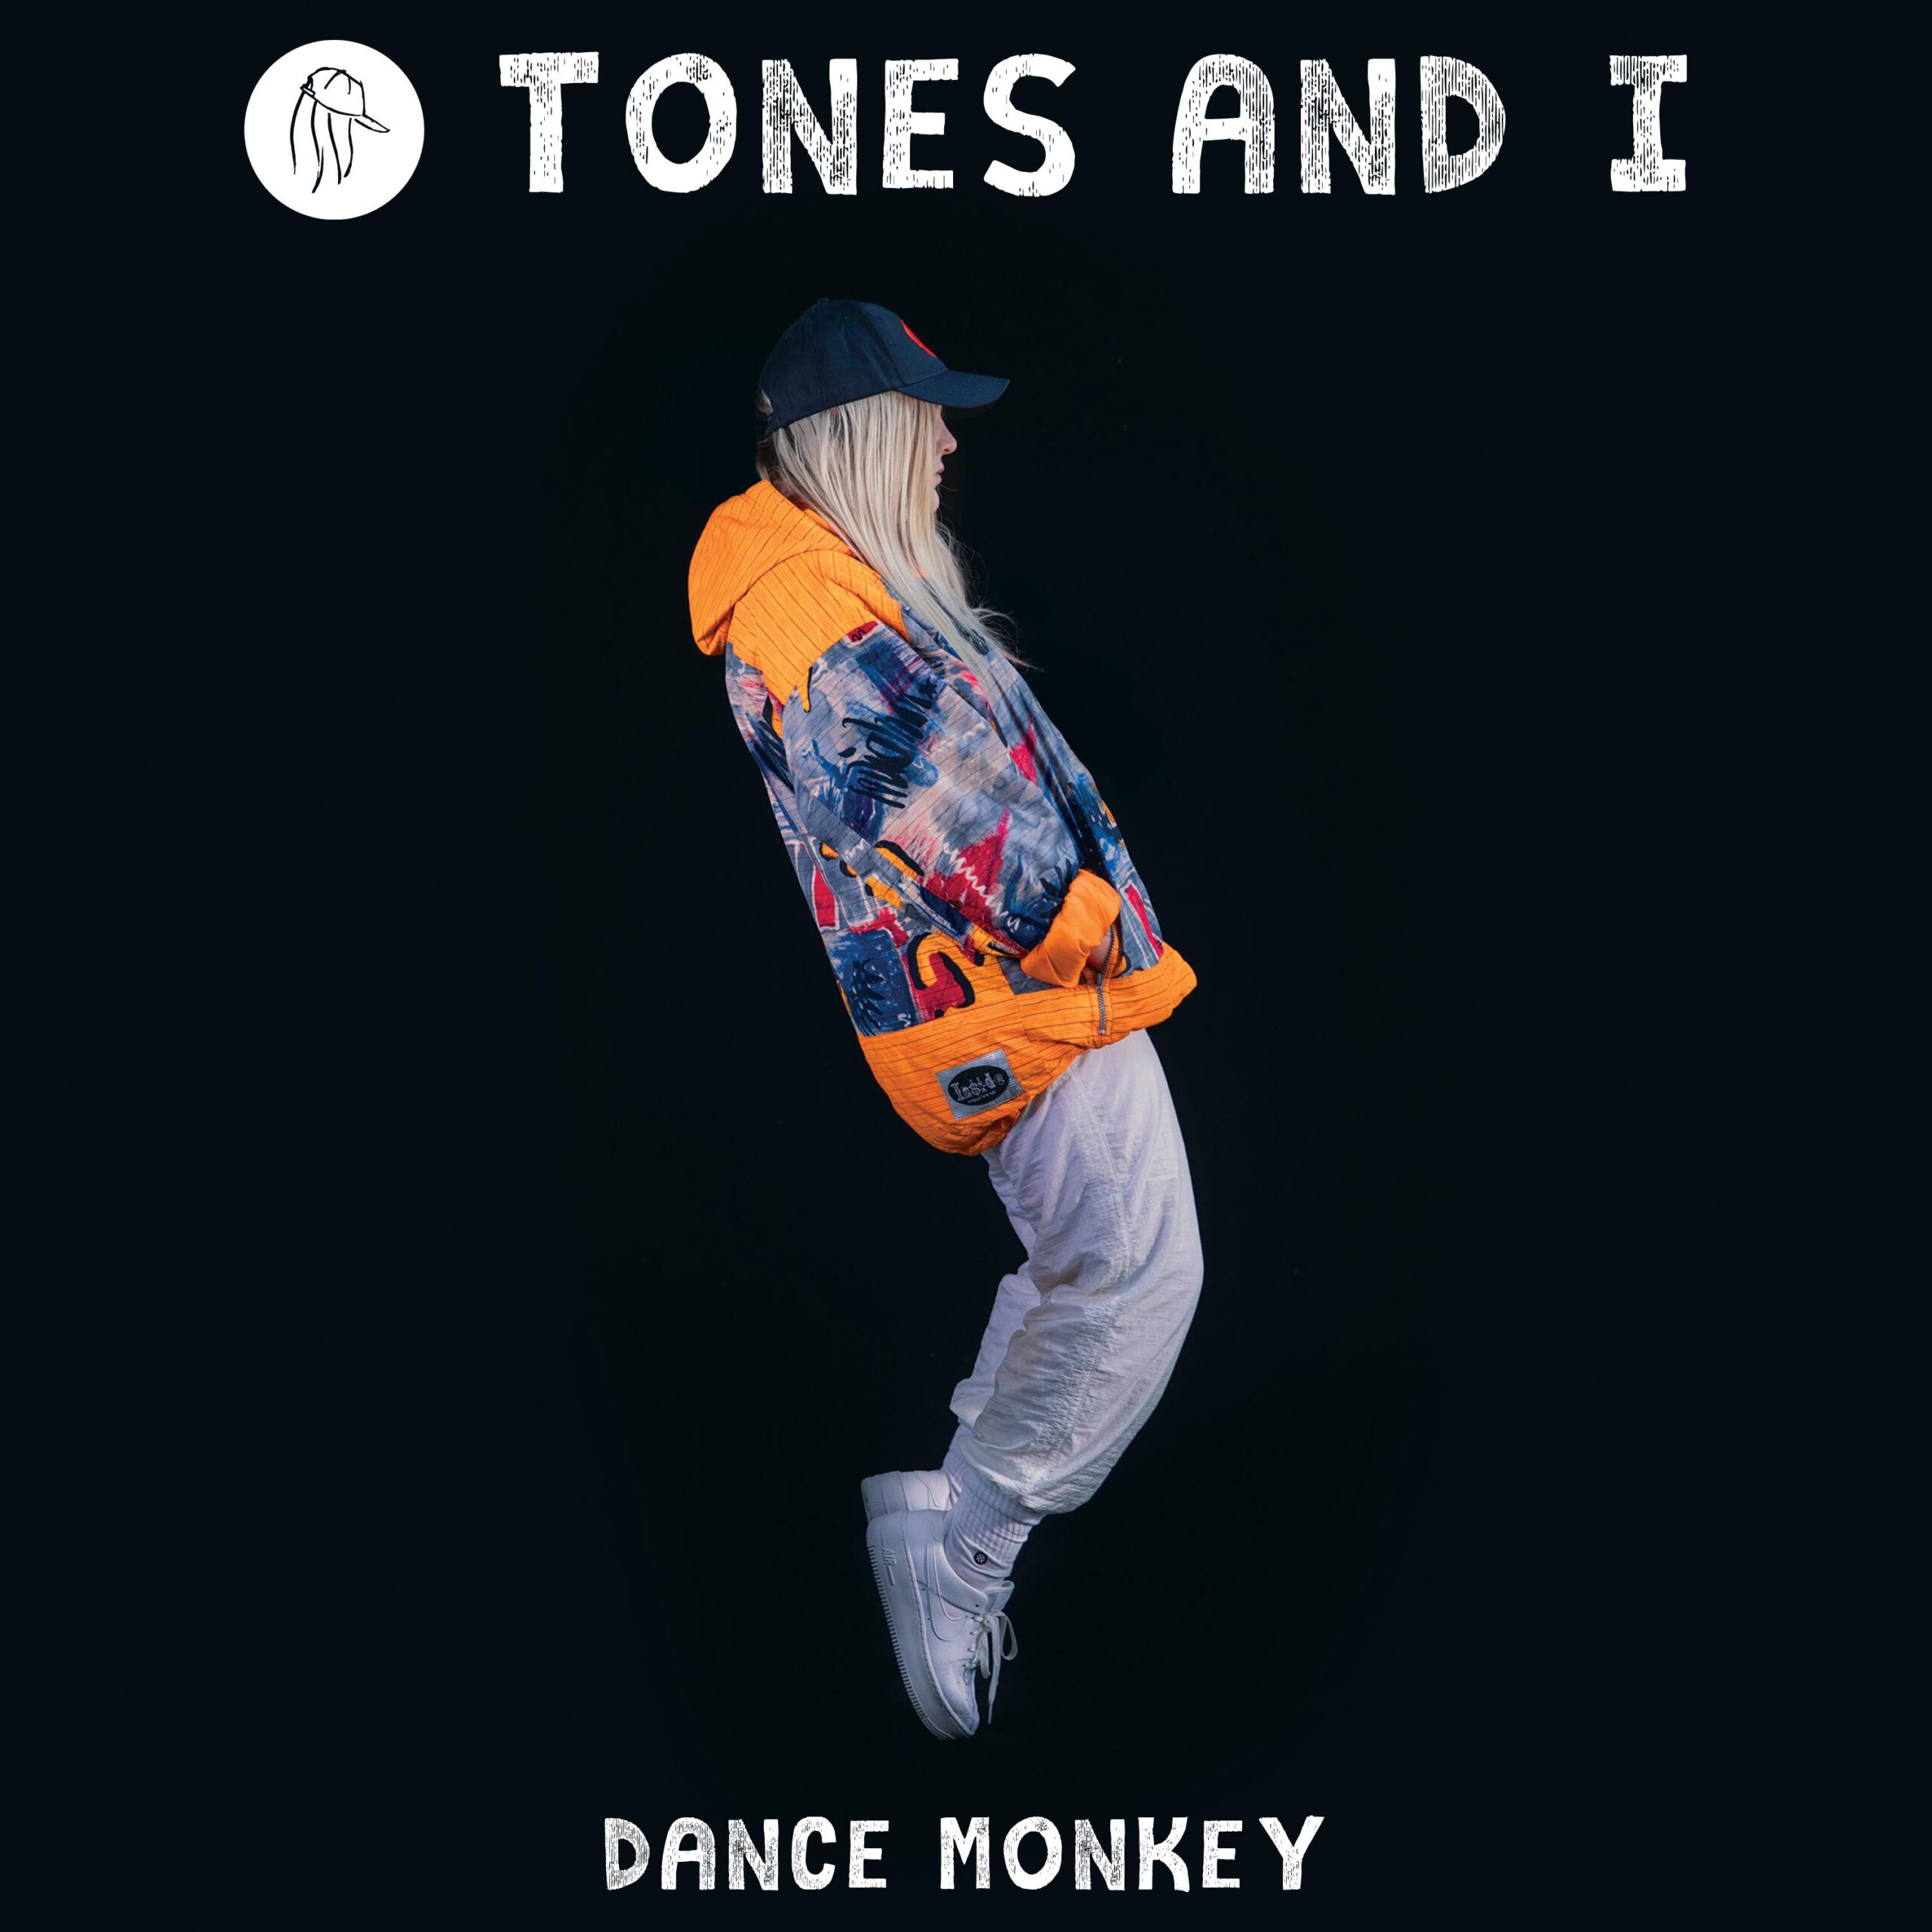 Dance monkey font